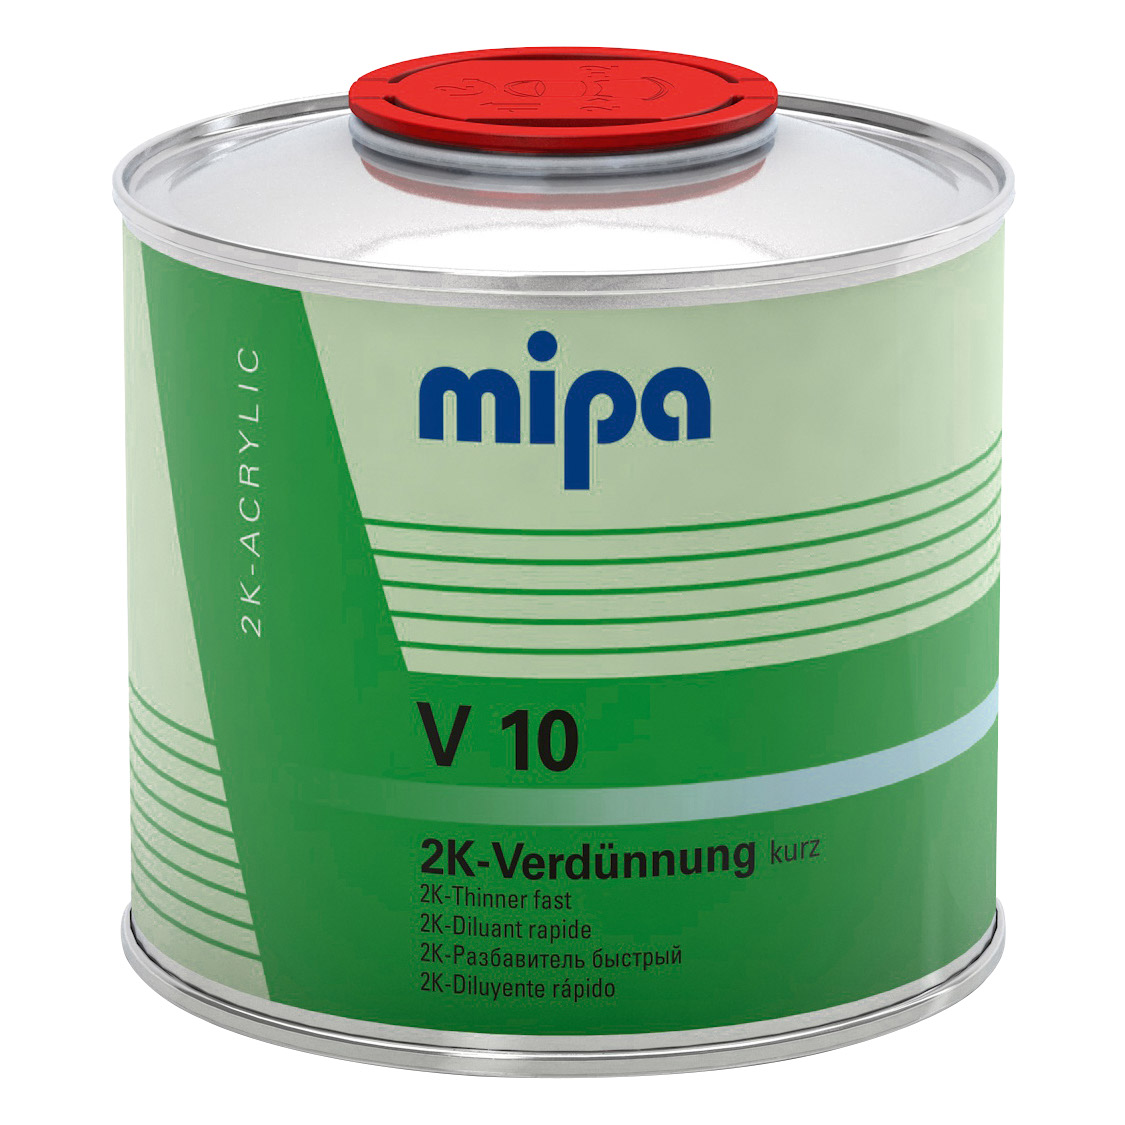 Mipa 2K-Verdünnung kurz V 10, 0,5l